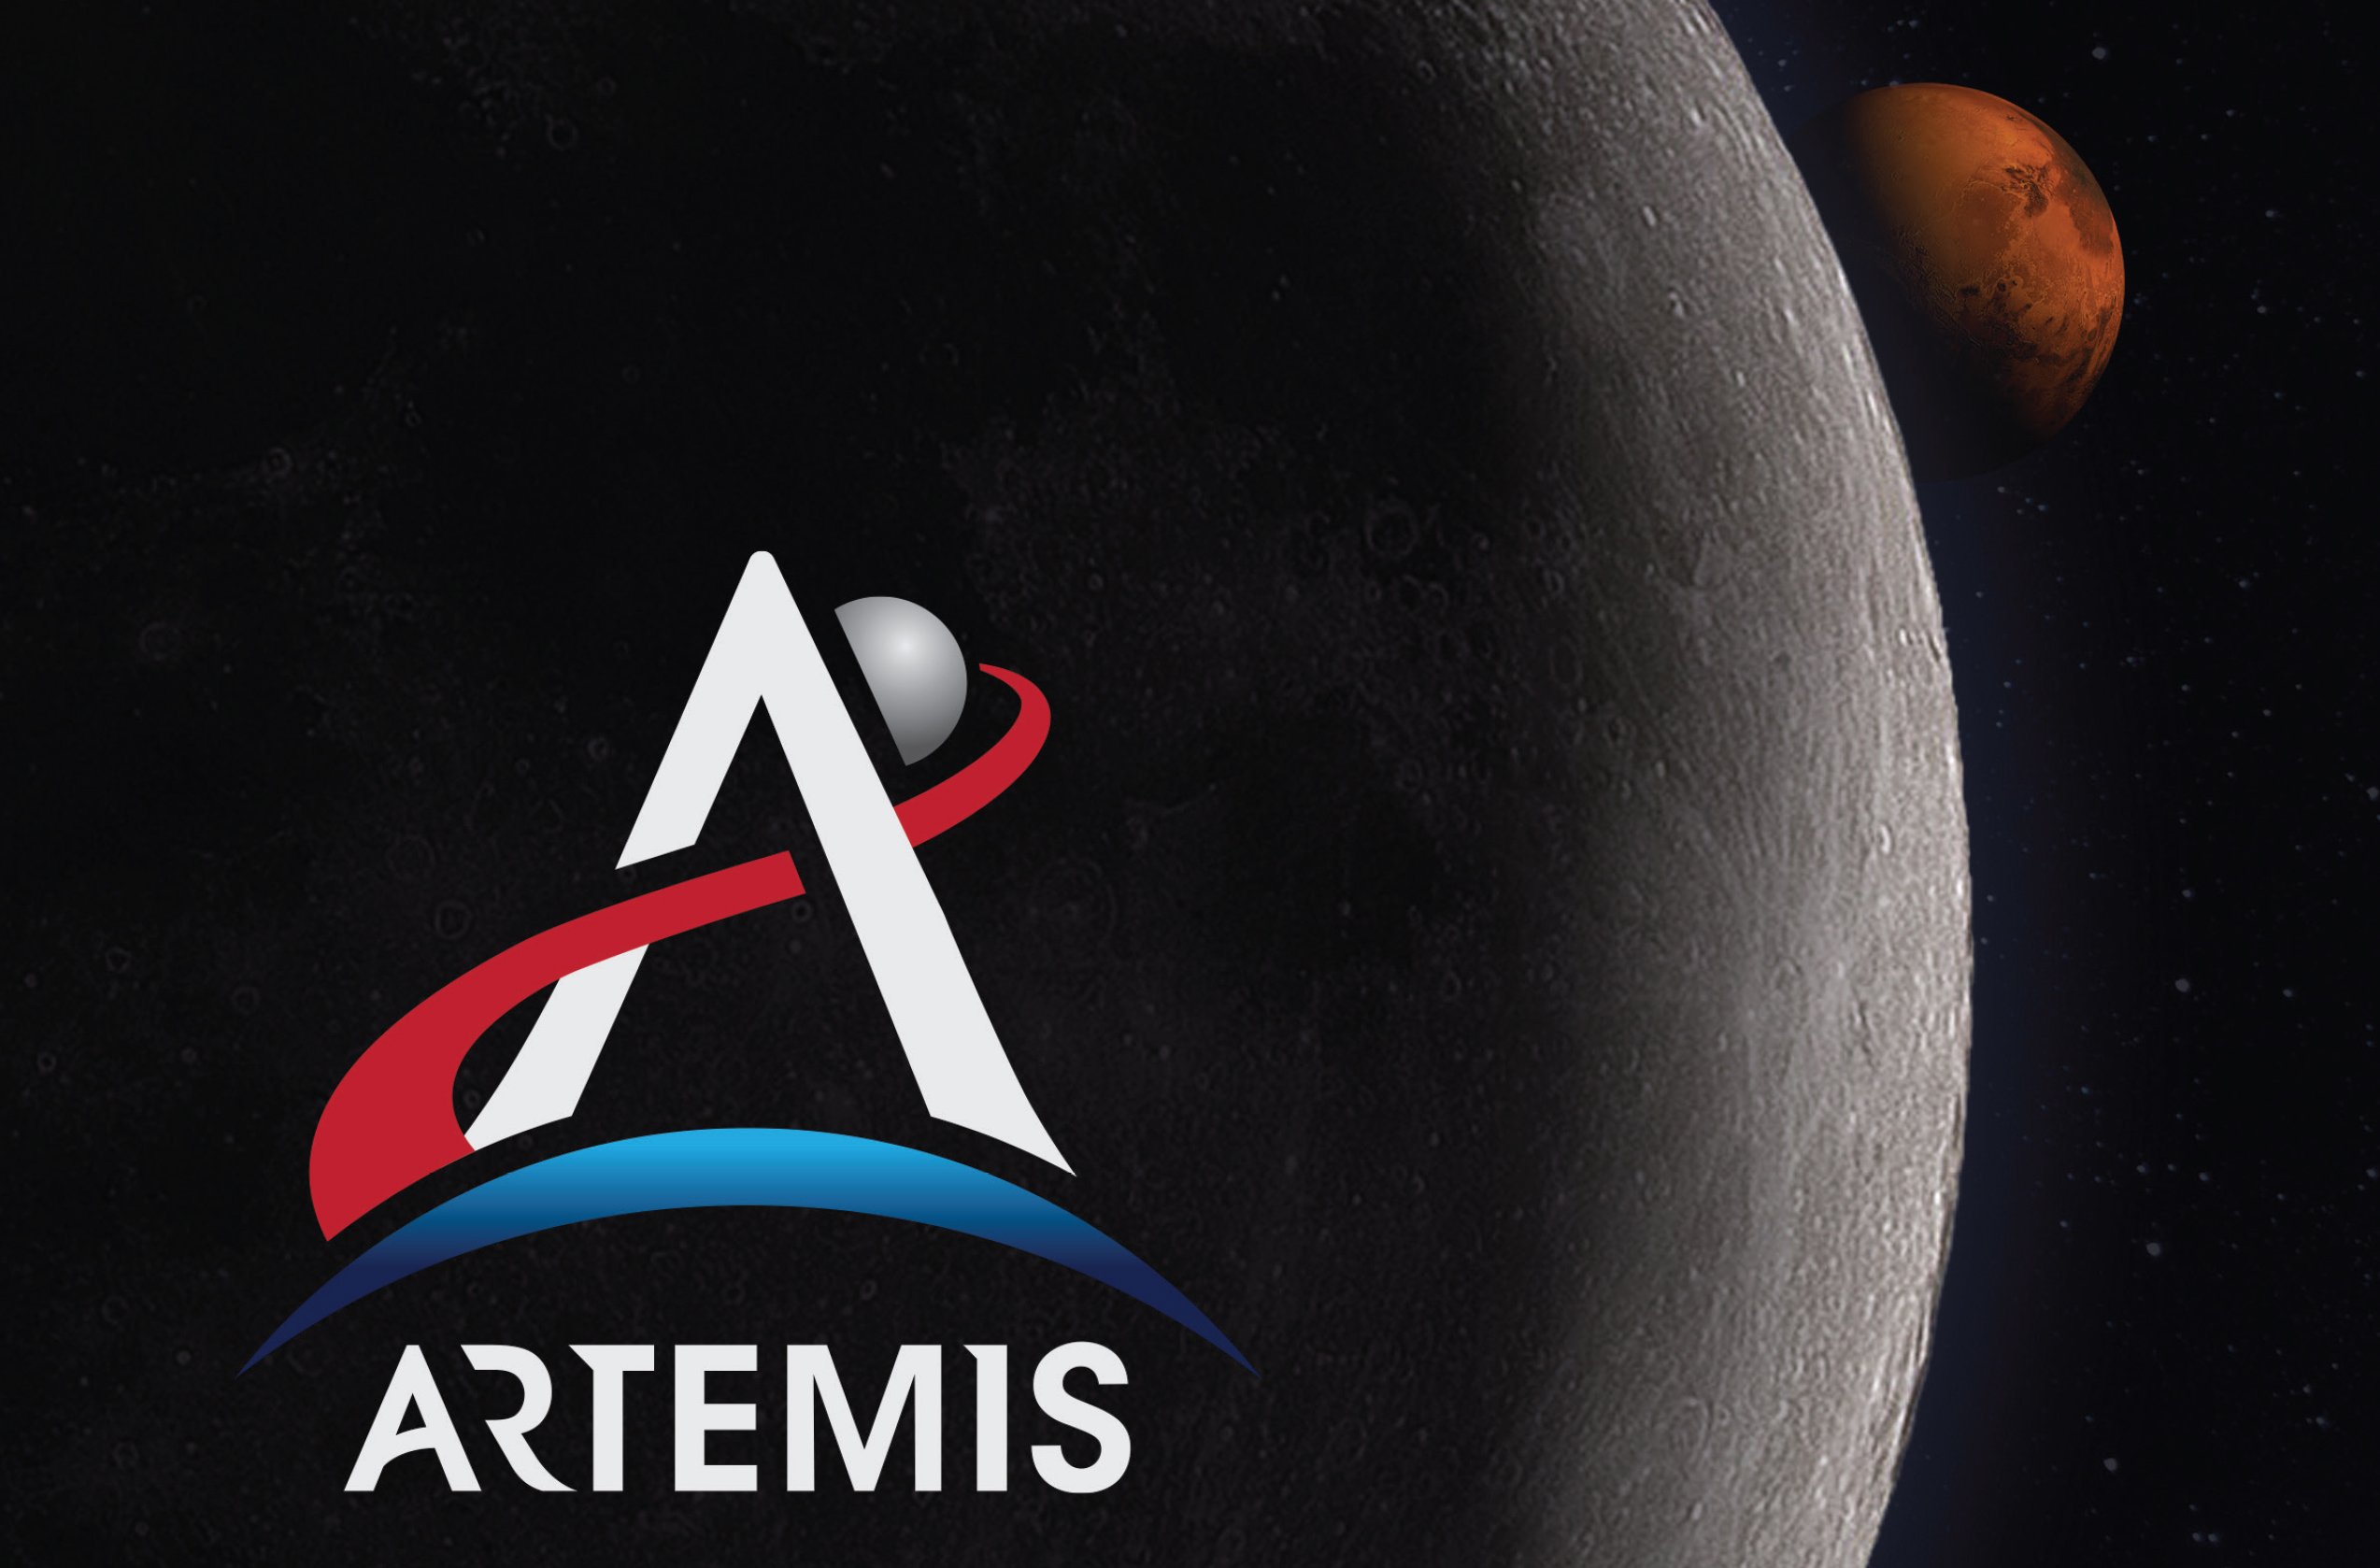 Identidade visual do projeto Artemis.